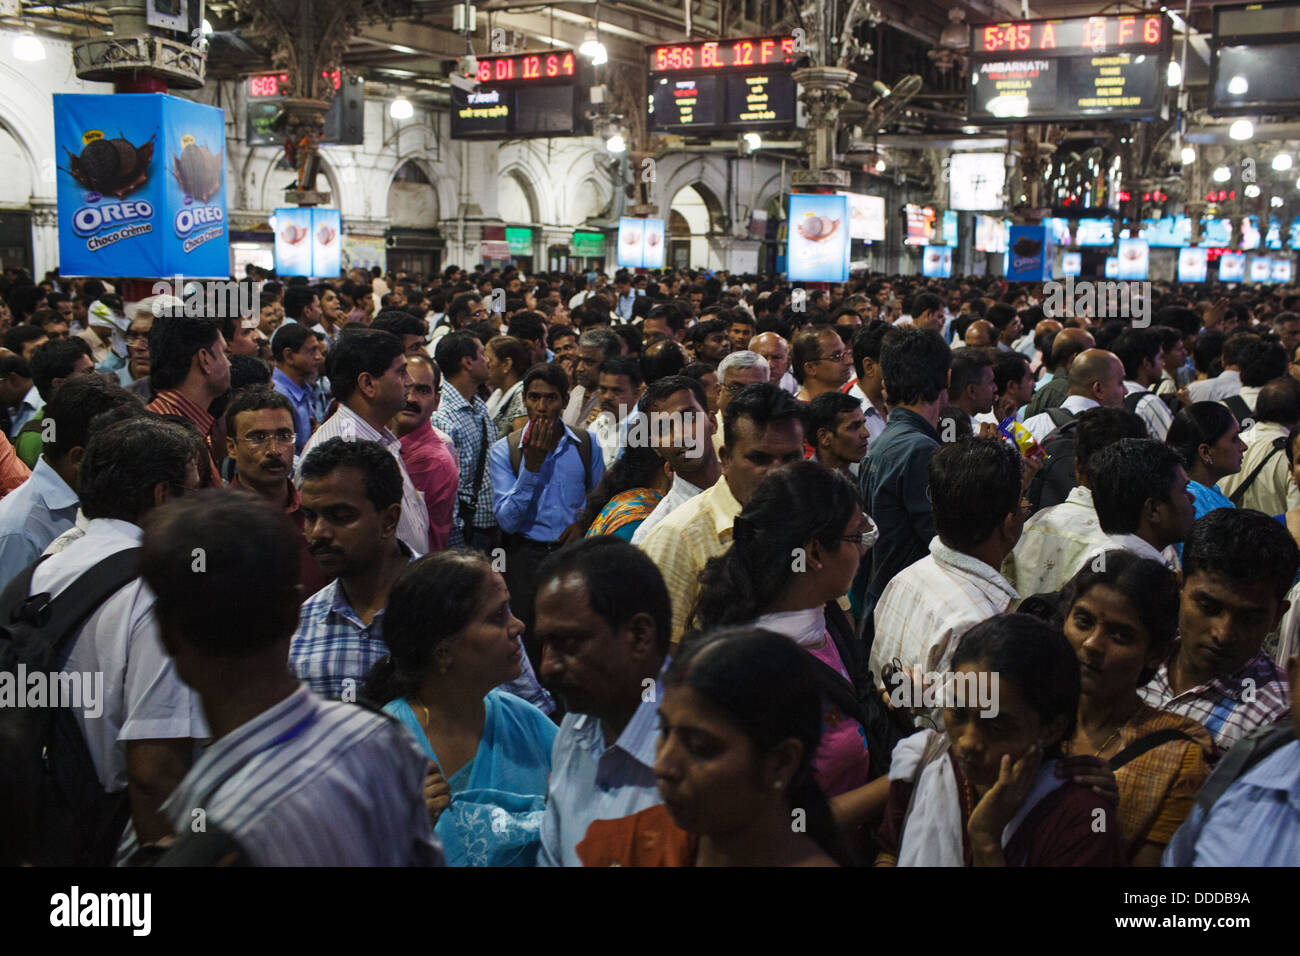 Passengers and trains at crowded Chhatrapati Shivaji Terminus (Victoria Terminus) railway station in Mumbai, India. Stock Photo